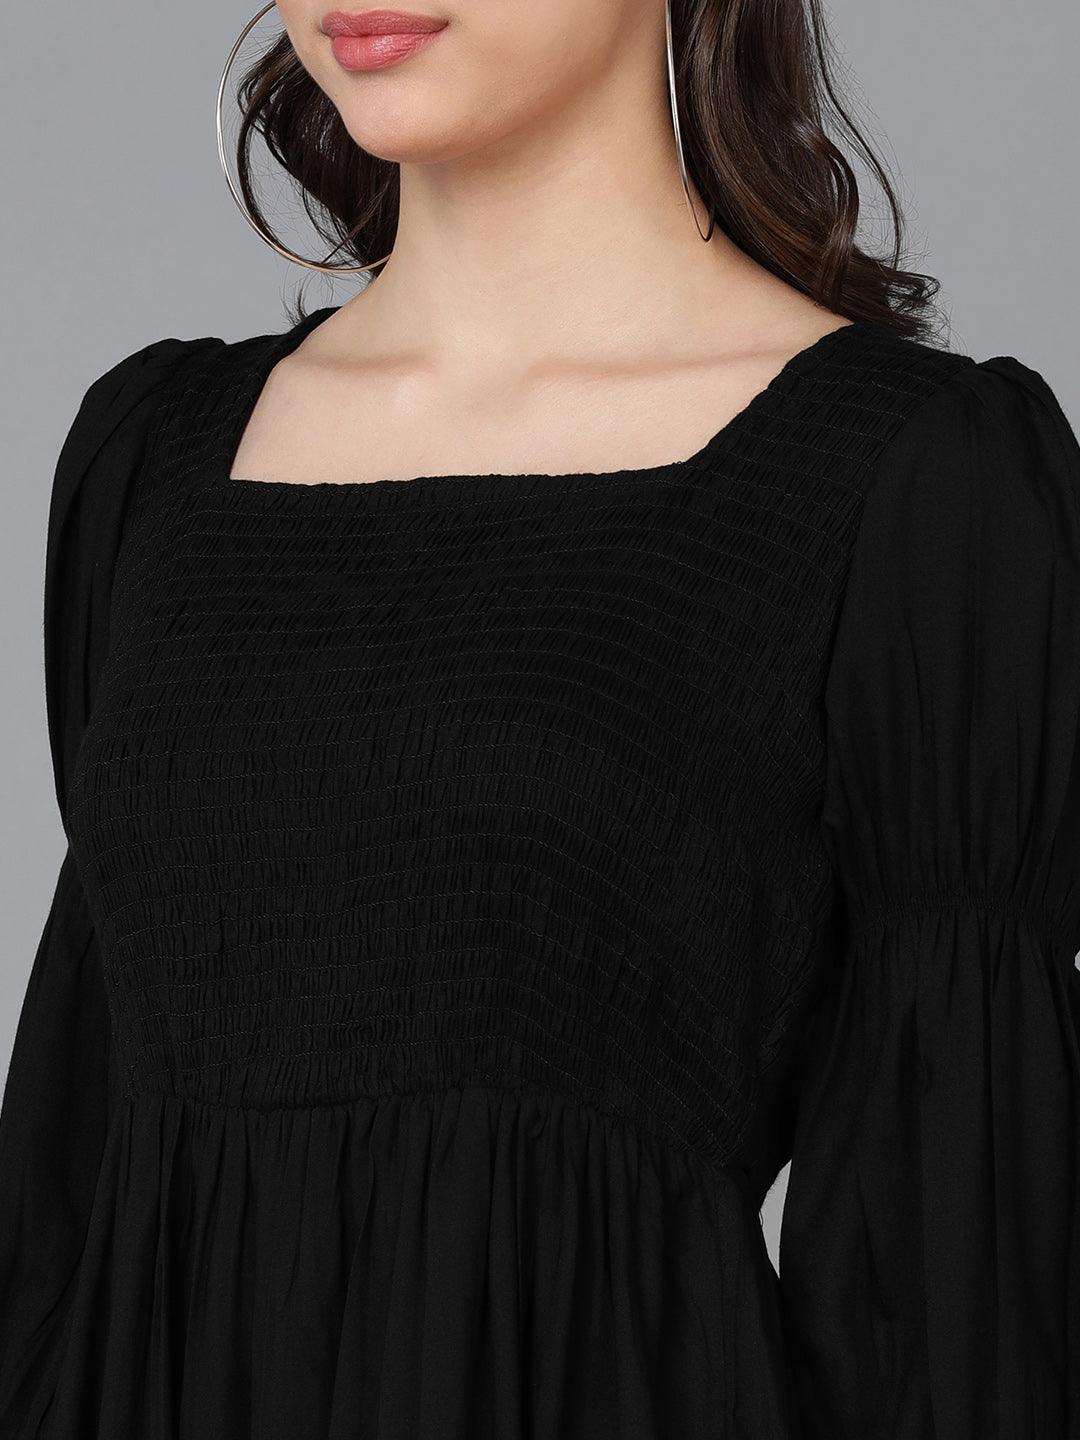 Solid Black Smocked Dress - Znxclothing